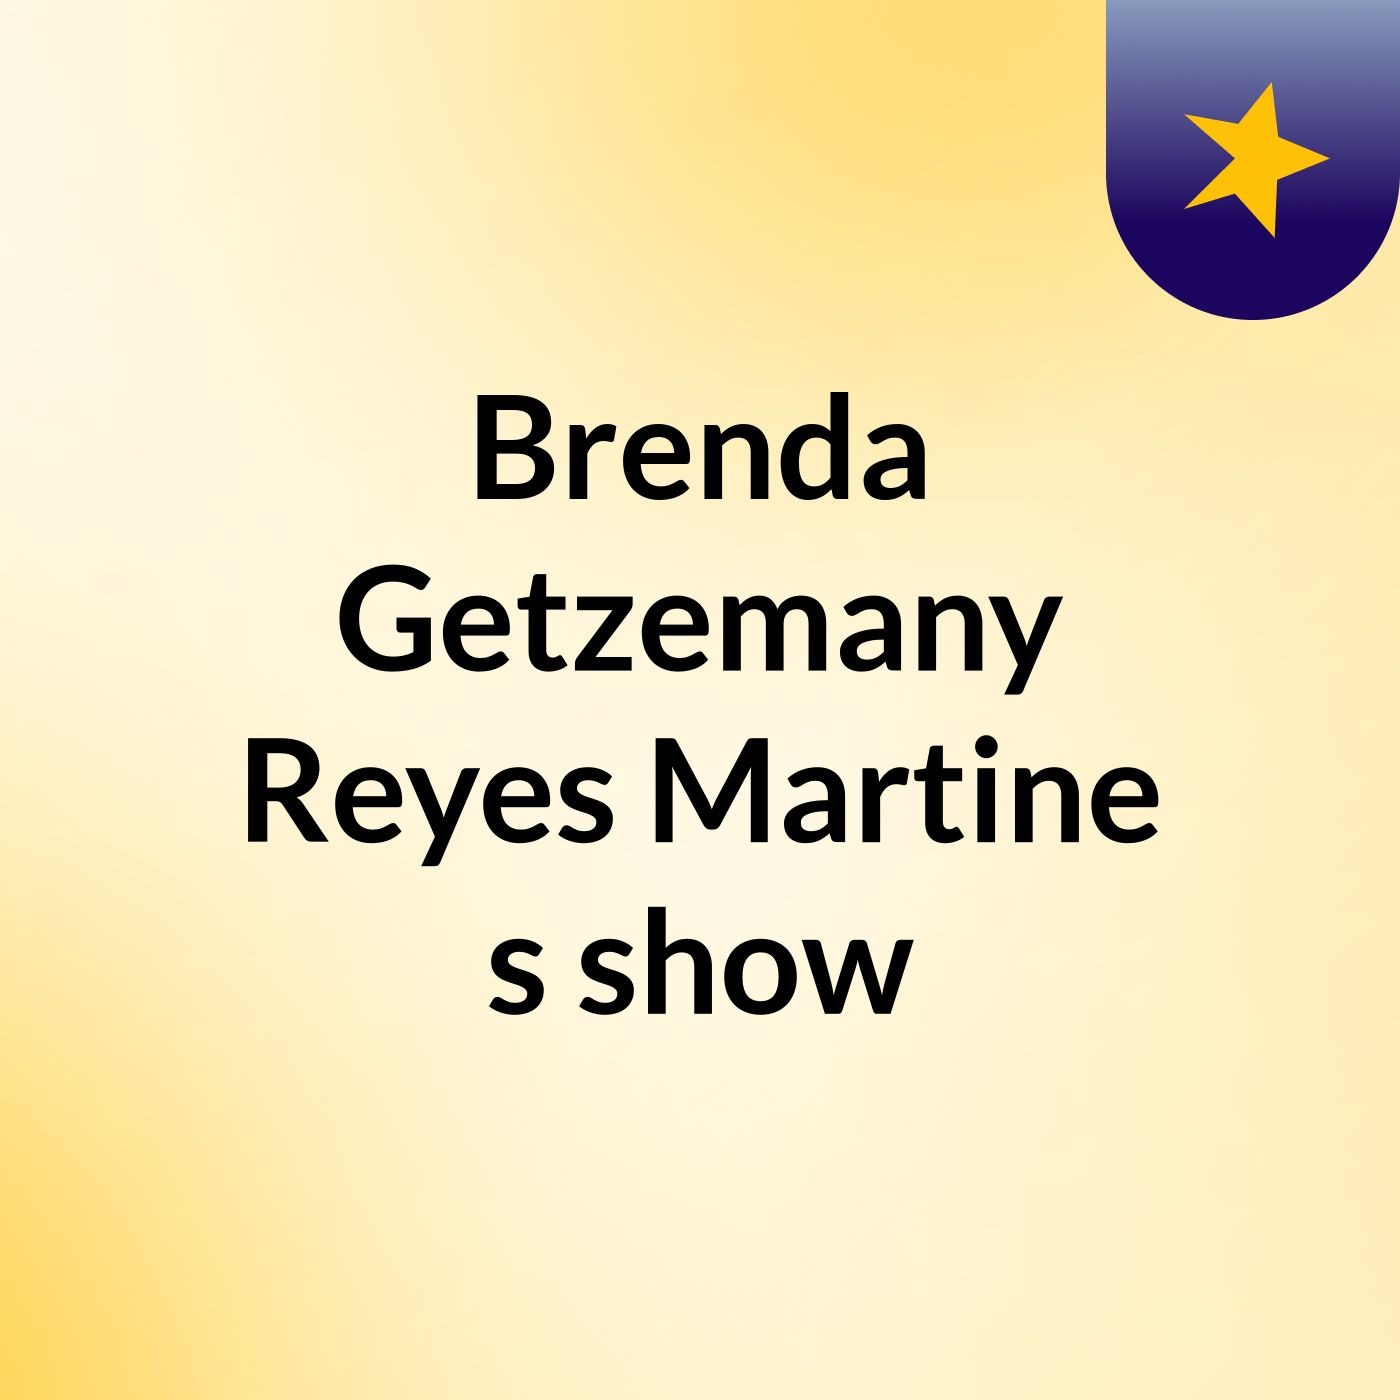 Brenda Getzemany Reyes Martine's show